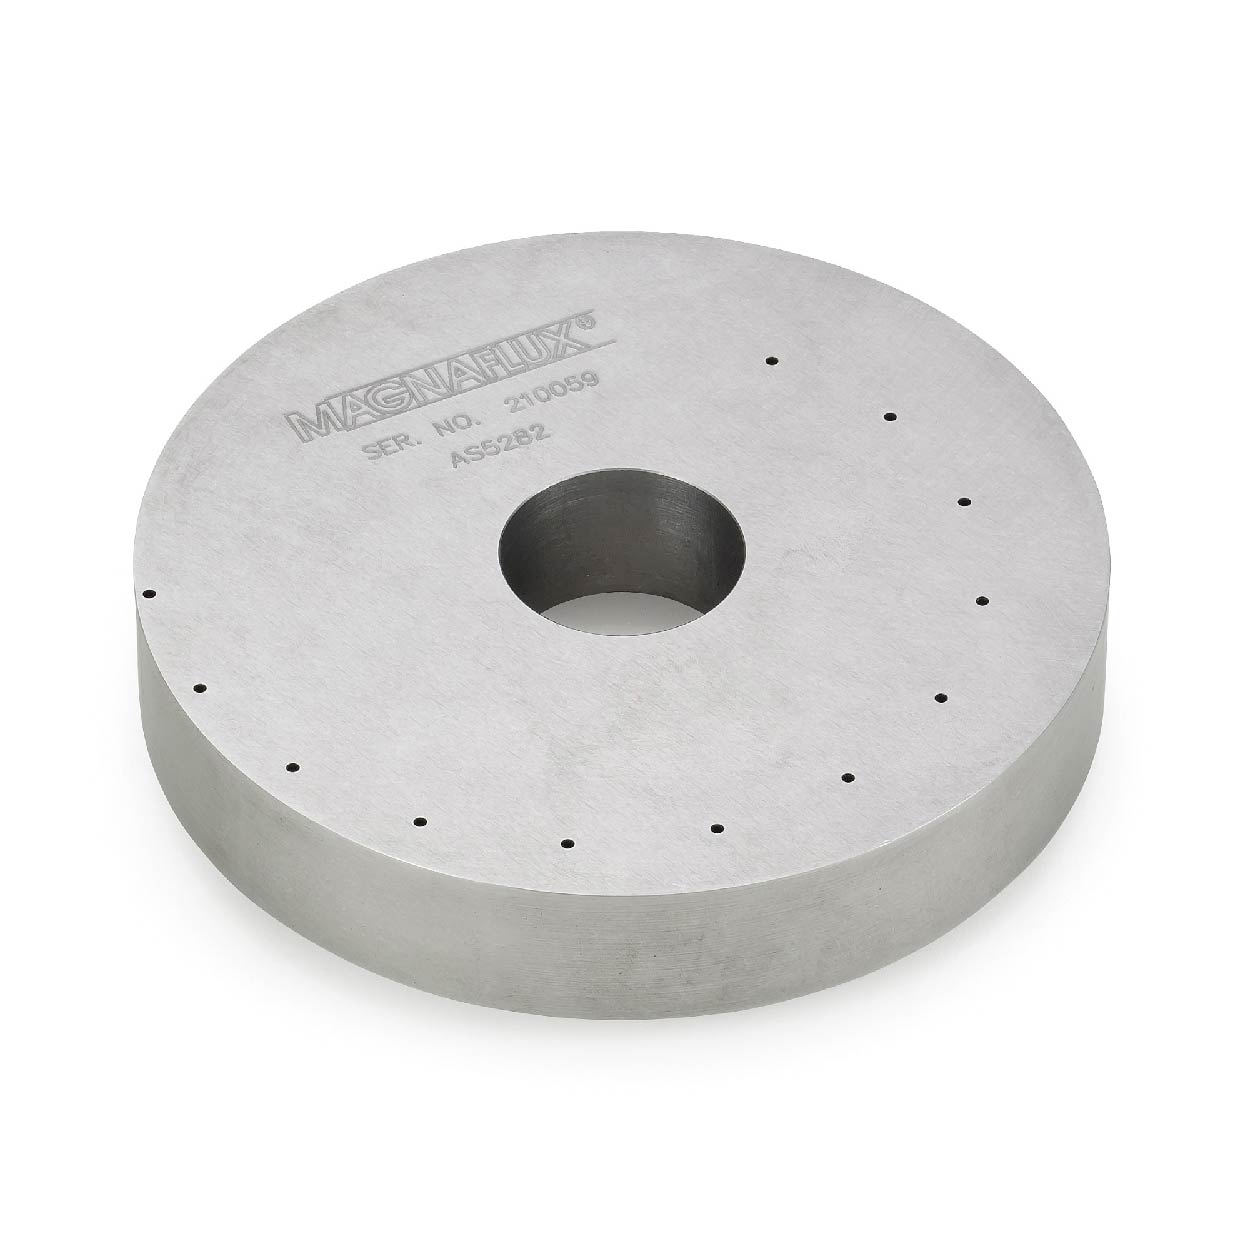 磁檢工具鋼環Tool Steel Ring AS 5282貝氏環